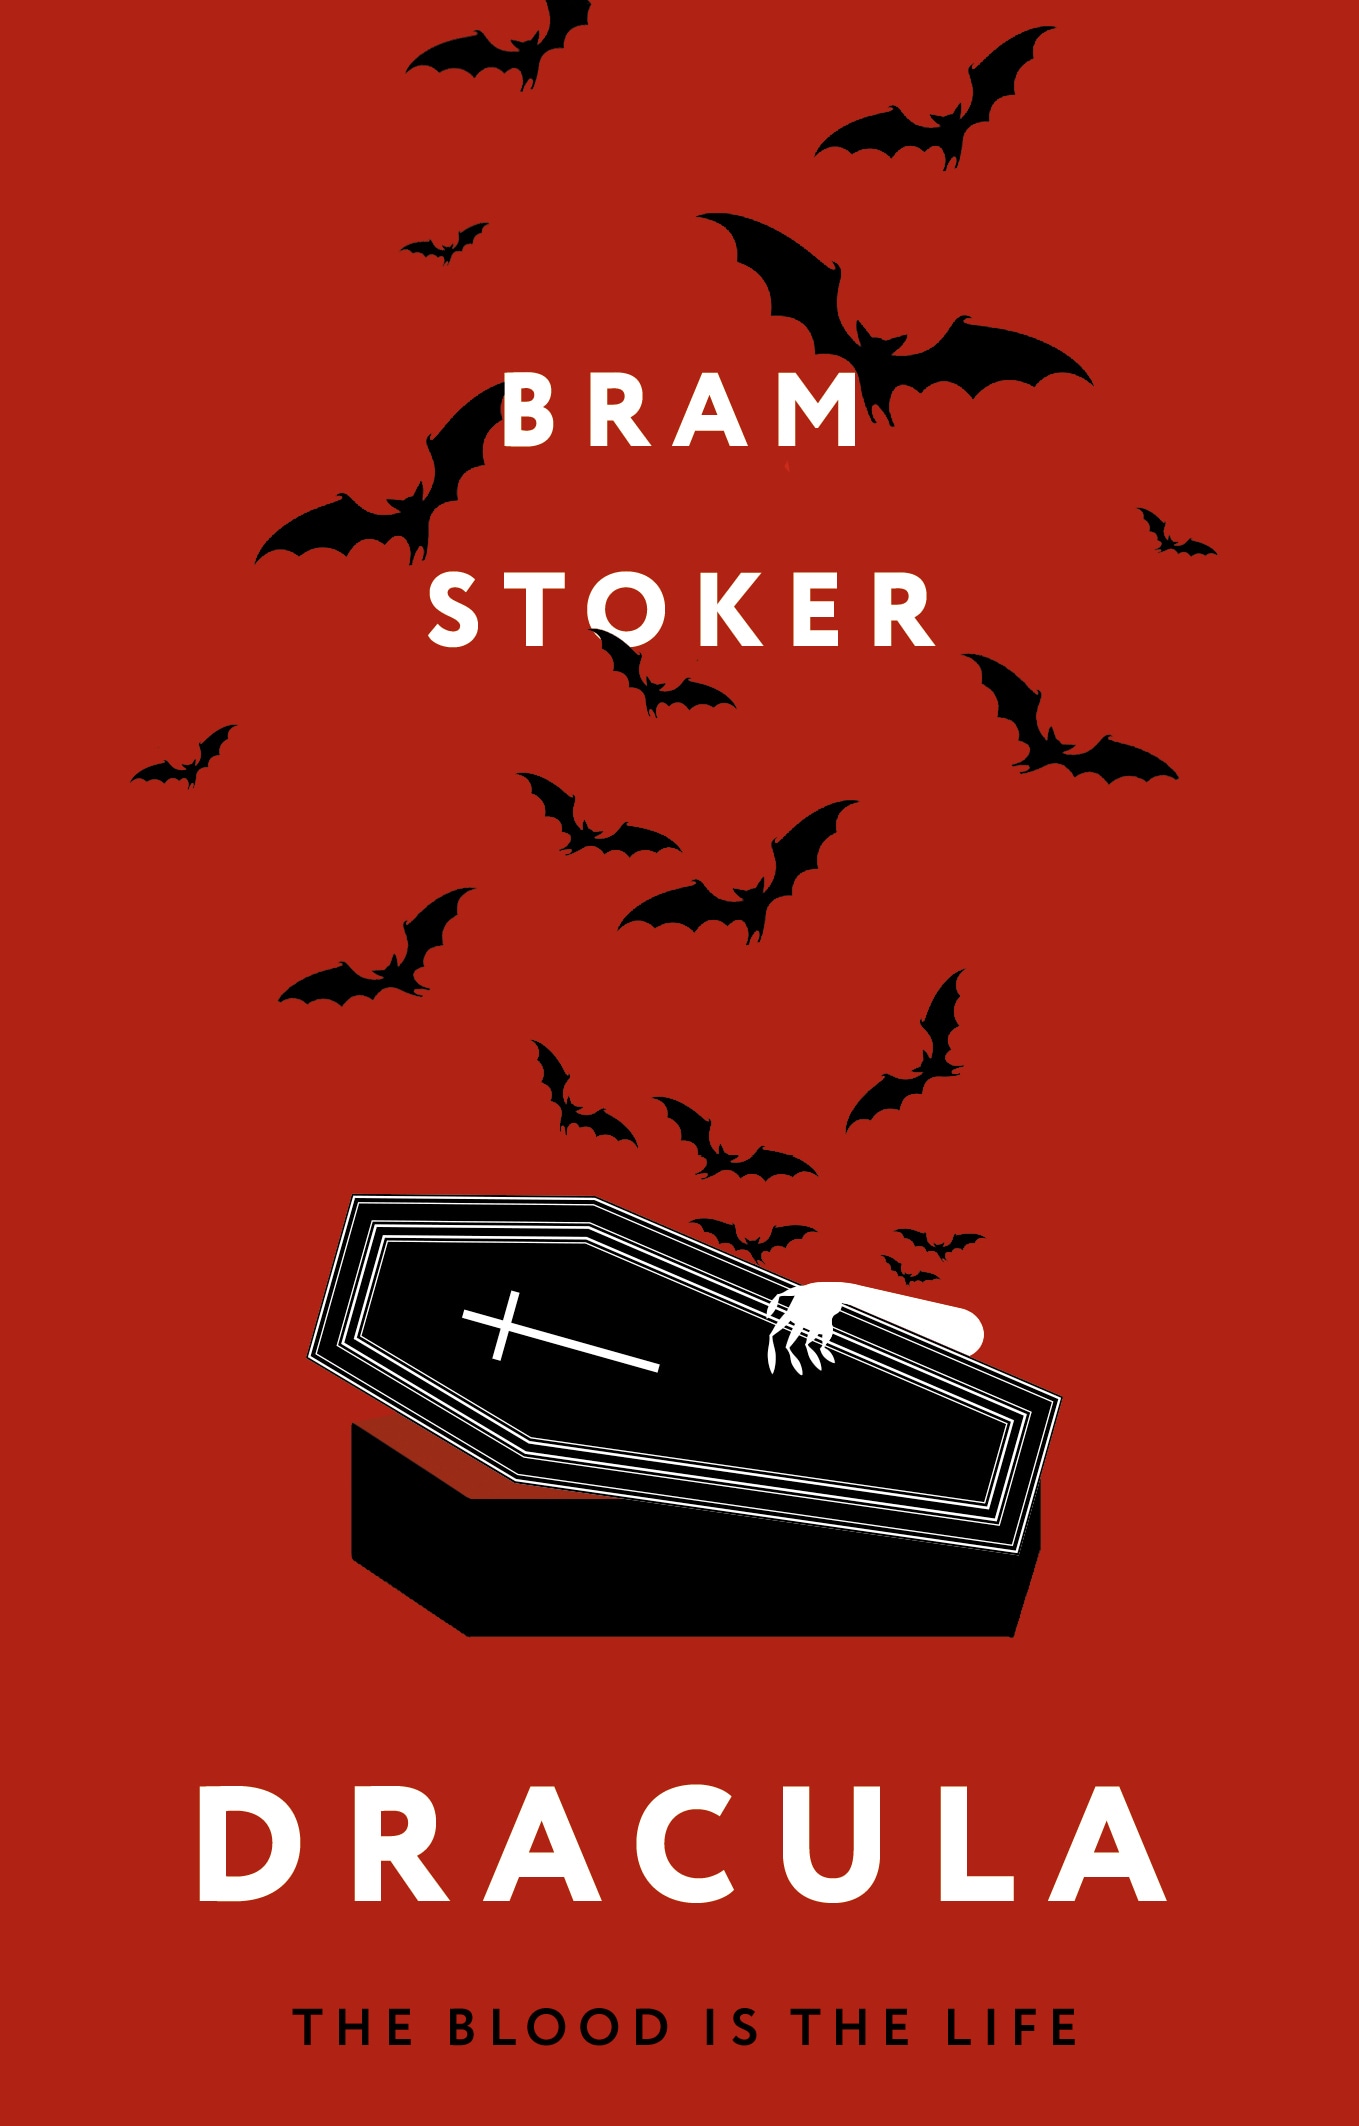 Book “Dracula” by Брэм Стокер — 2022